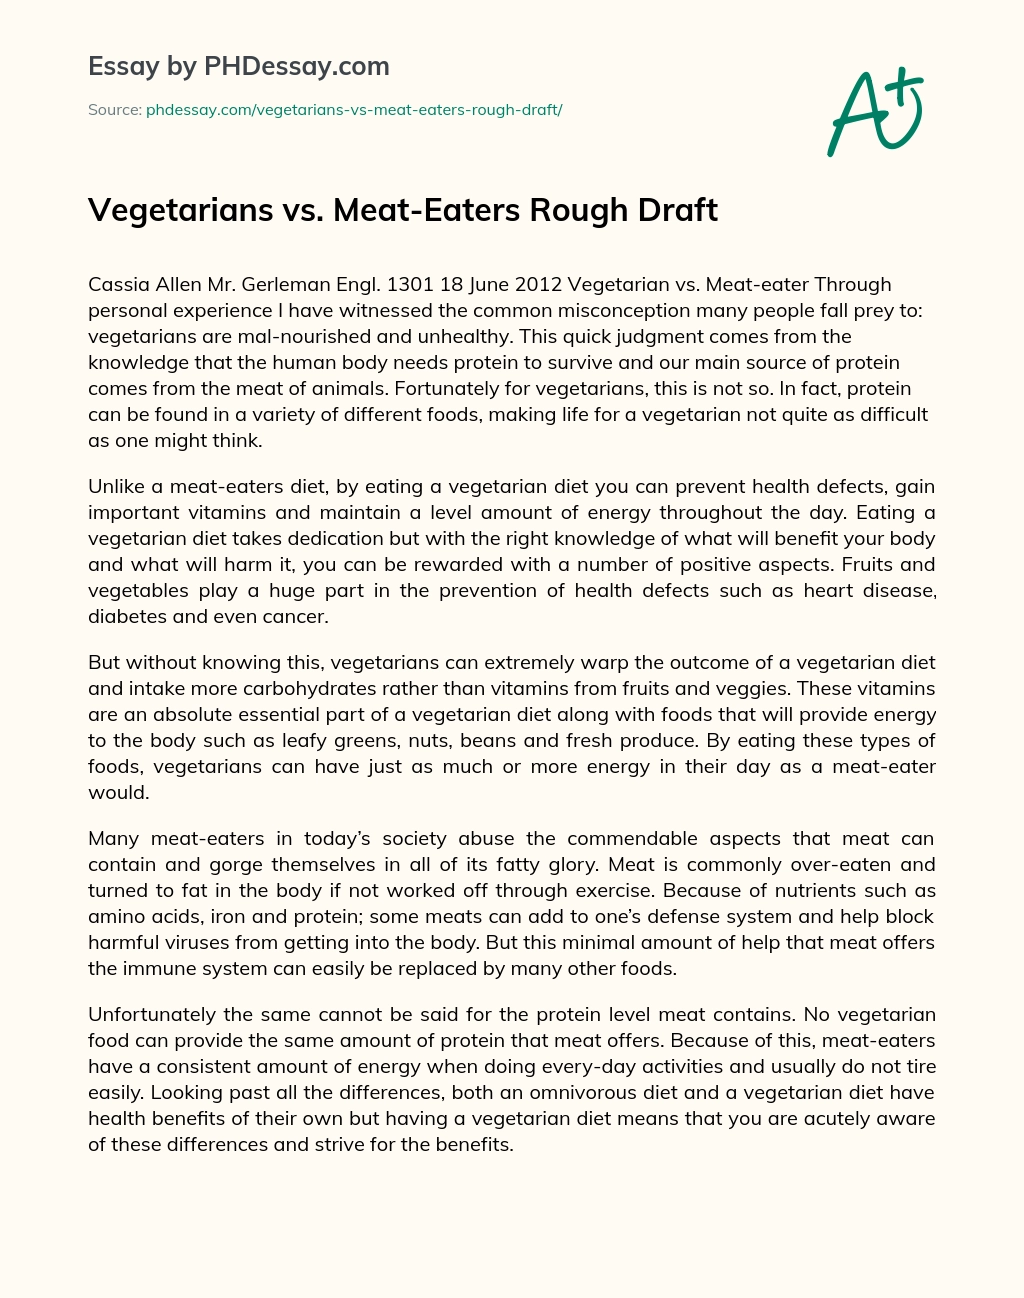 Vegetarians vs. Meat-Eaters Rough Draft essay